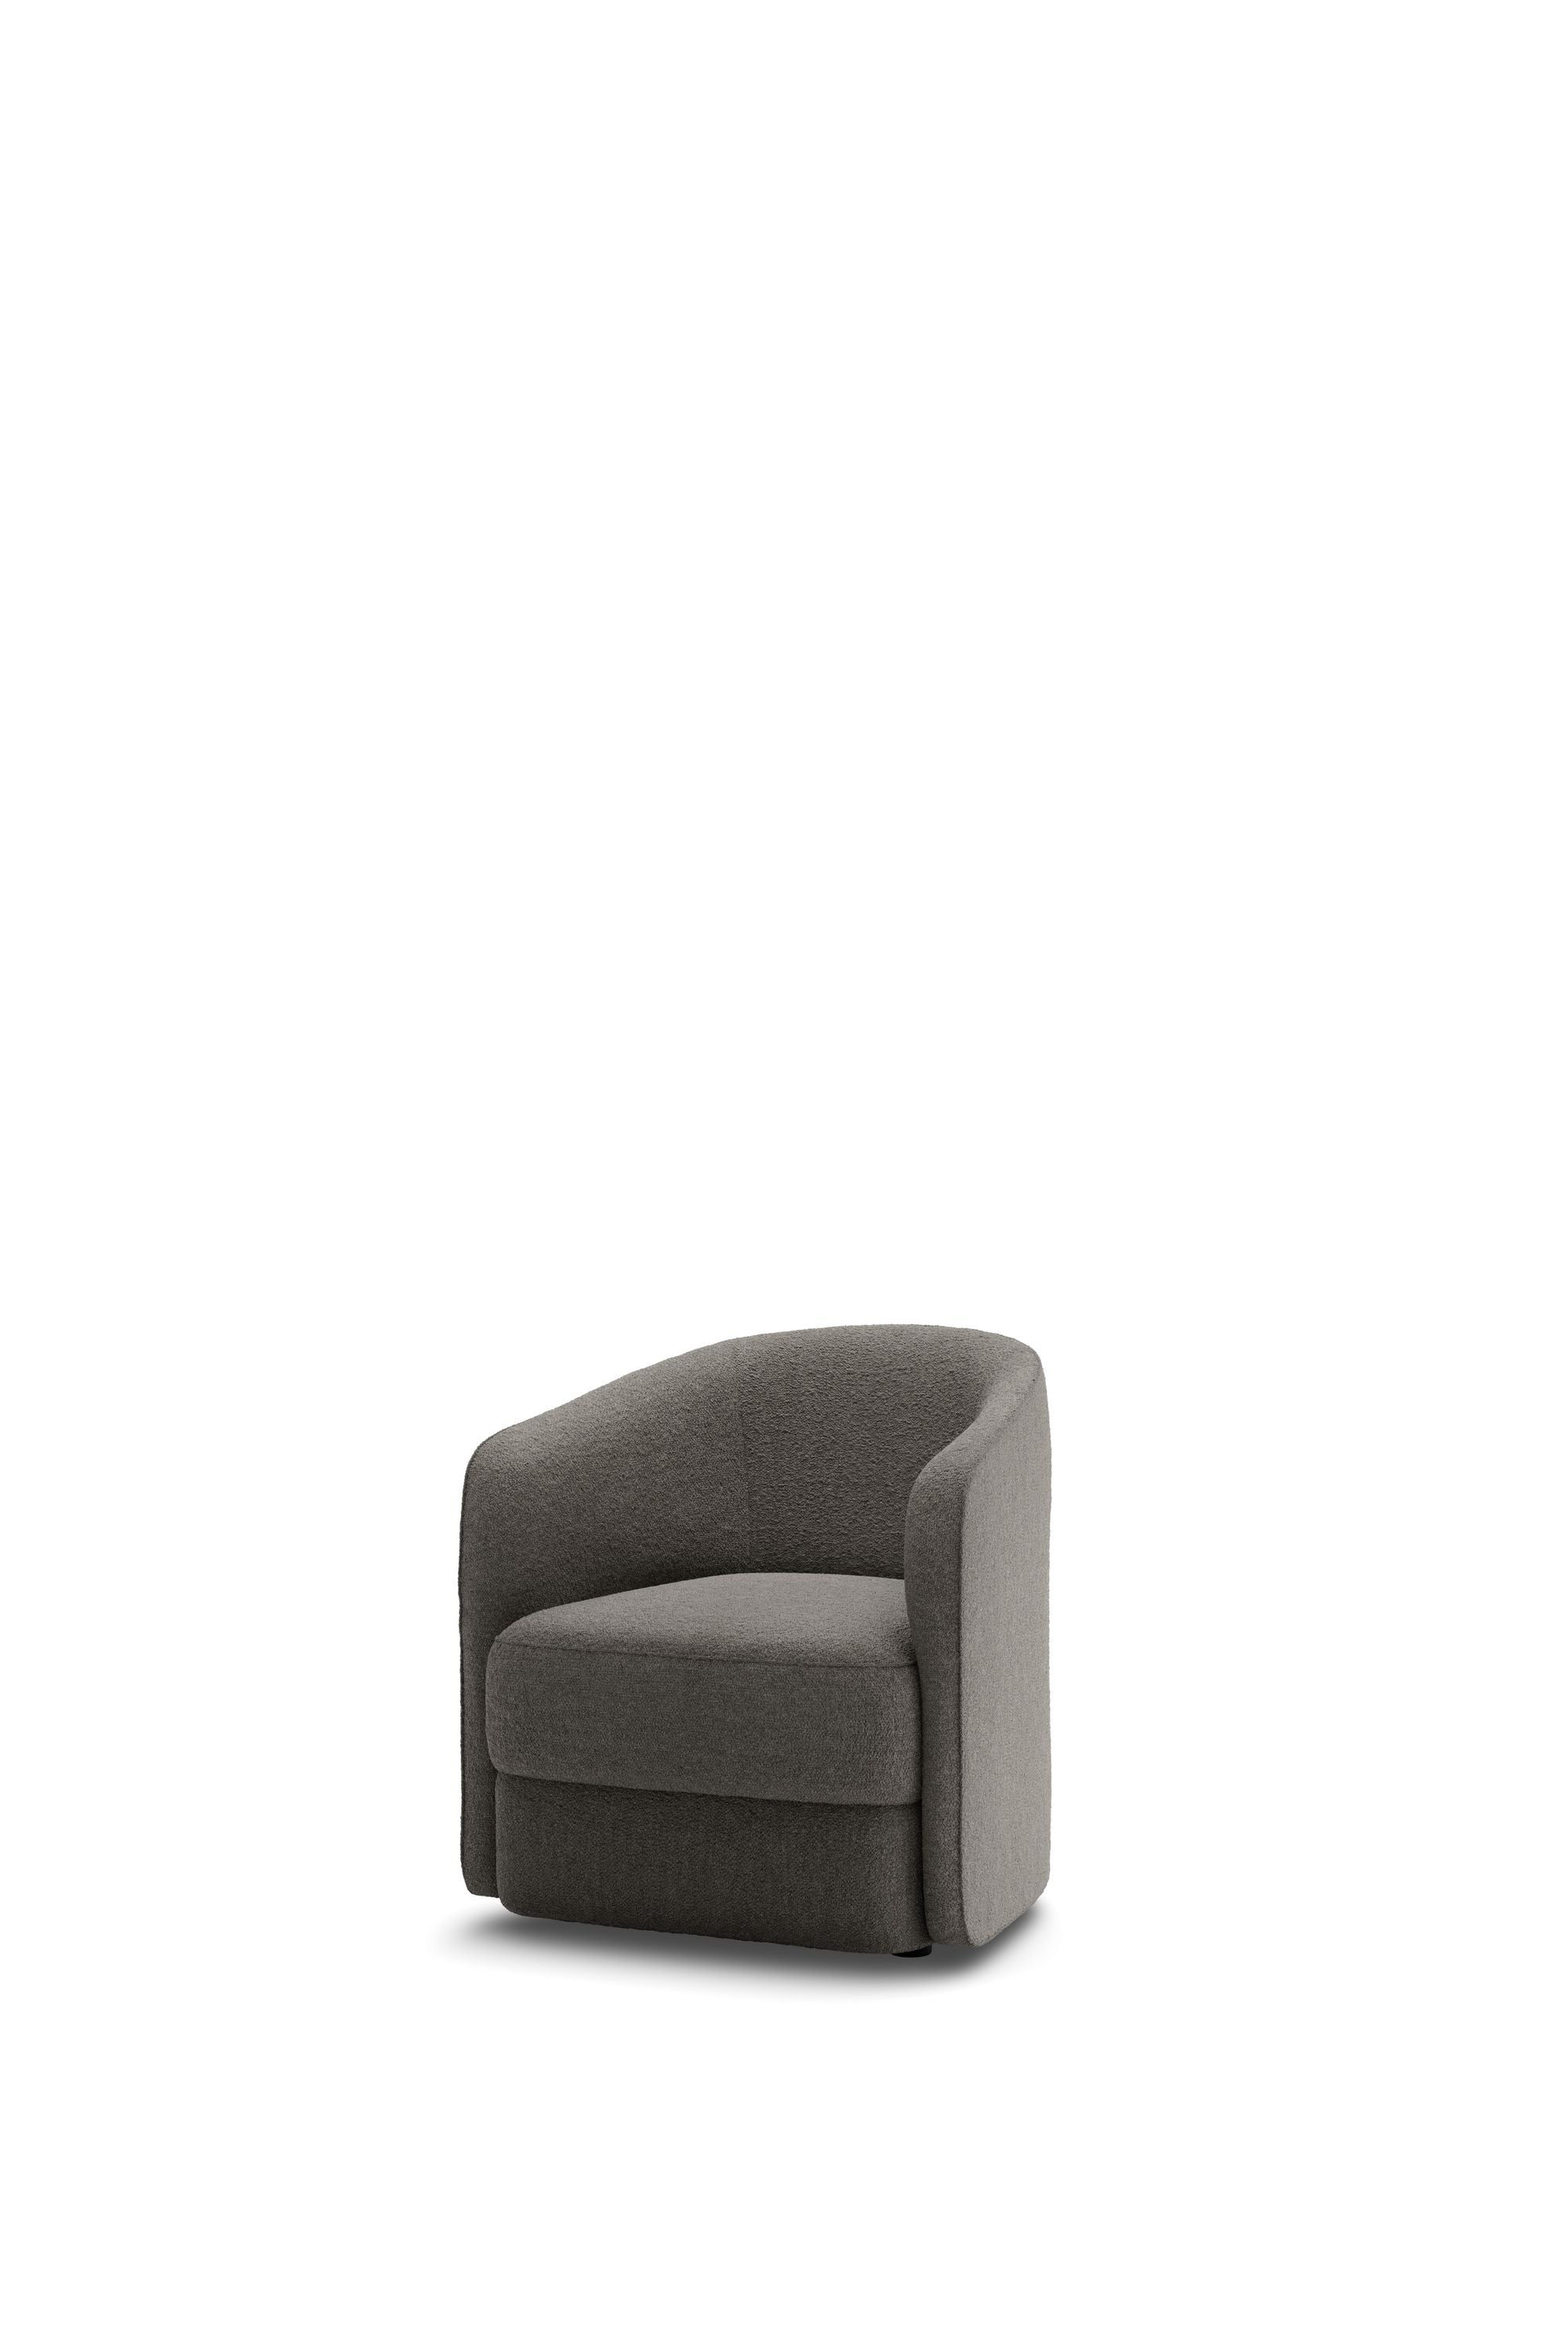 Nye verk Covent Lounge Chair smal, mørk taupe